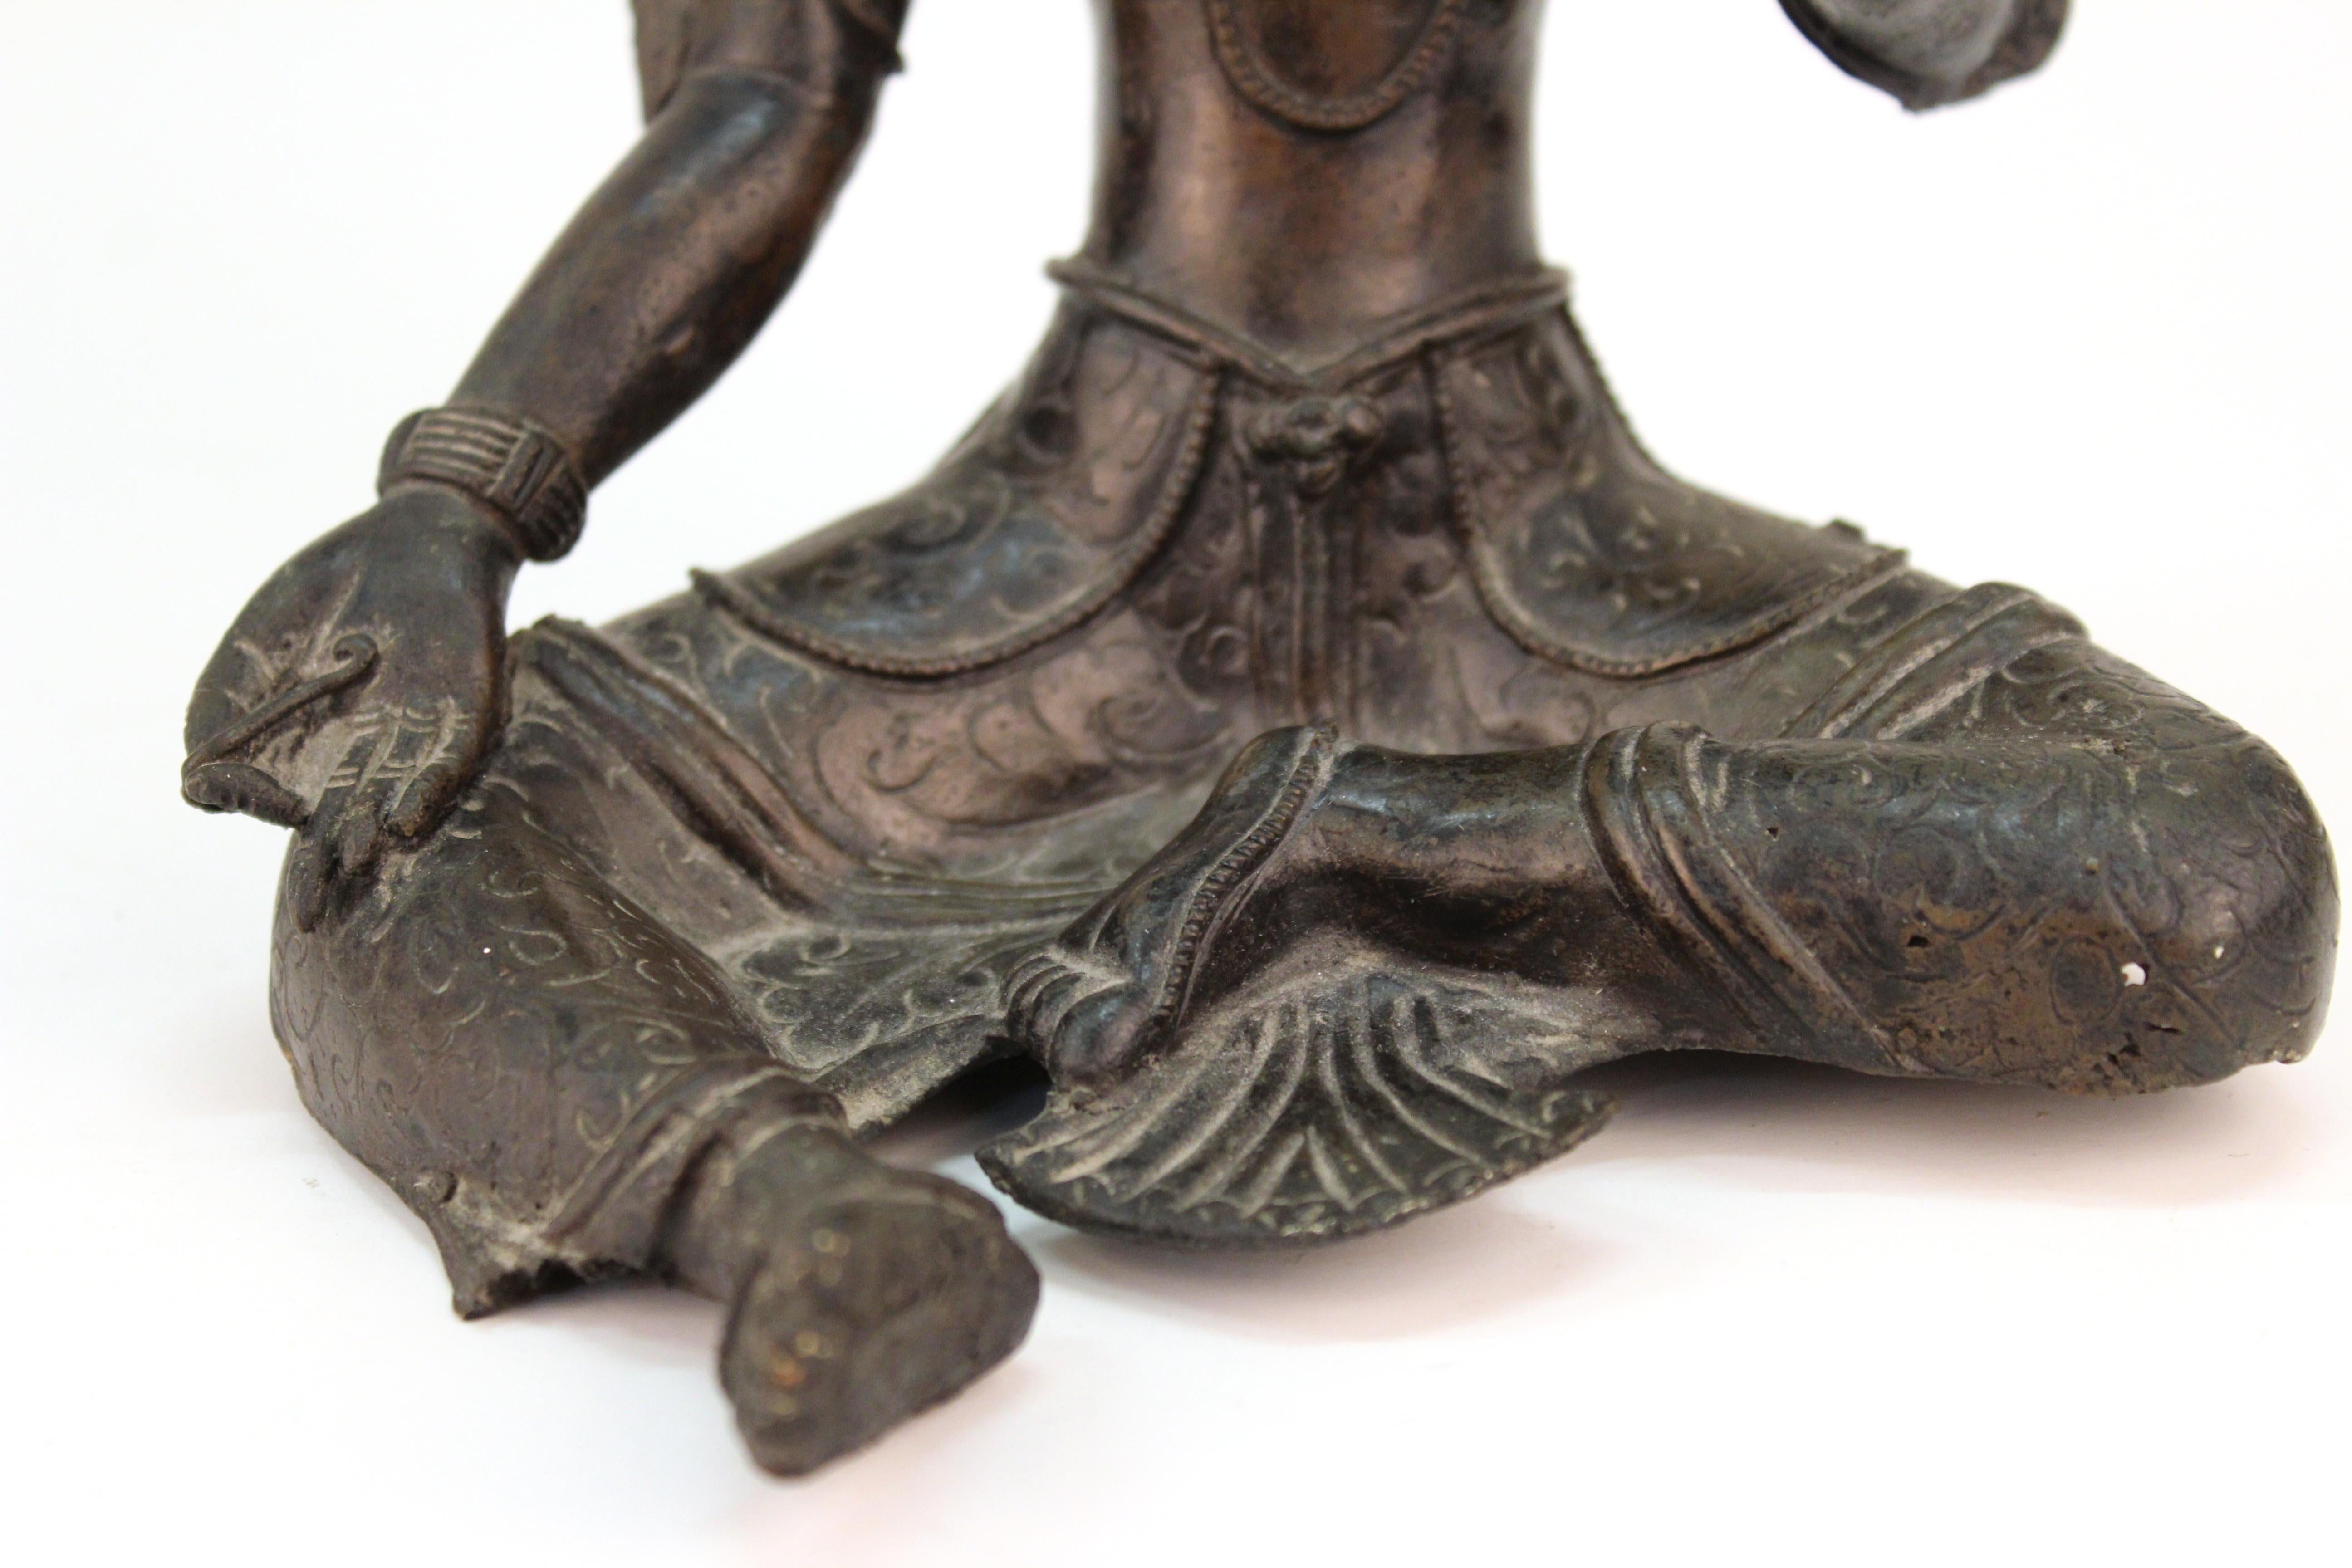 Tibetan Bronzed Metal Buddhist Sculpture of the Seated Bodhisattva Tara 4